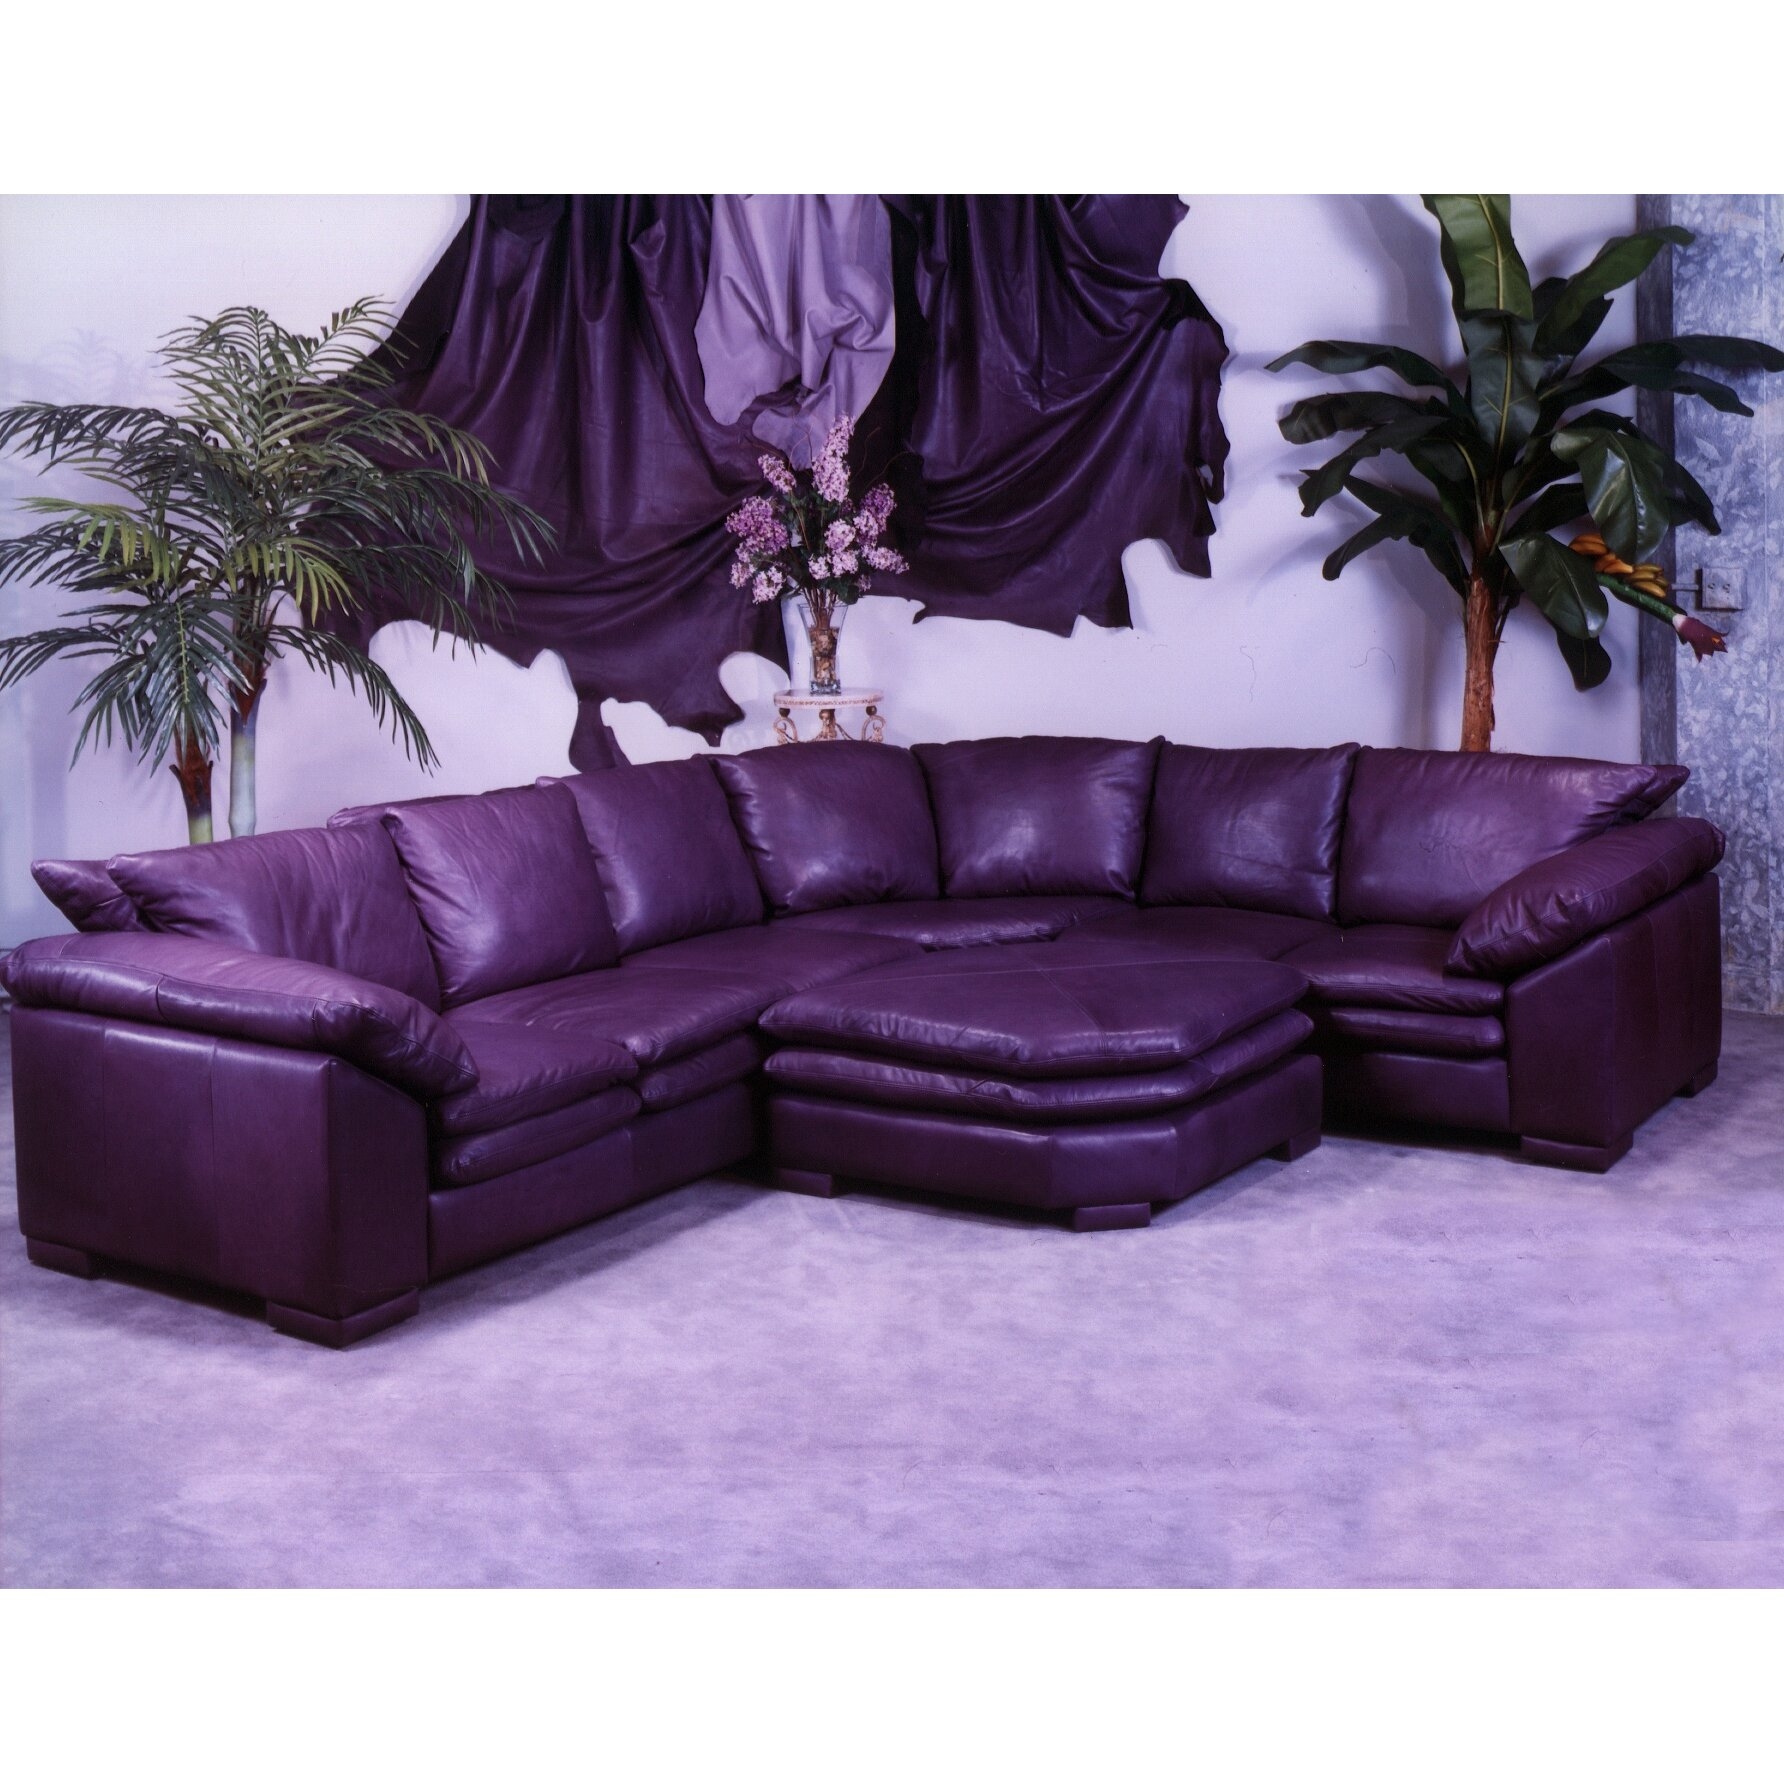 Purple leather furniture